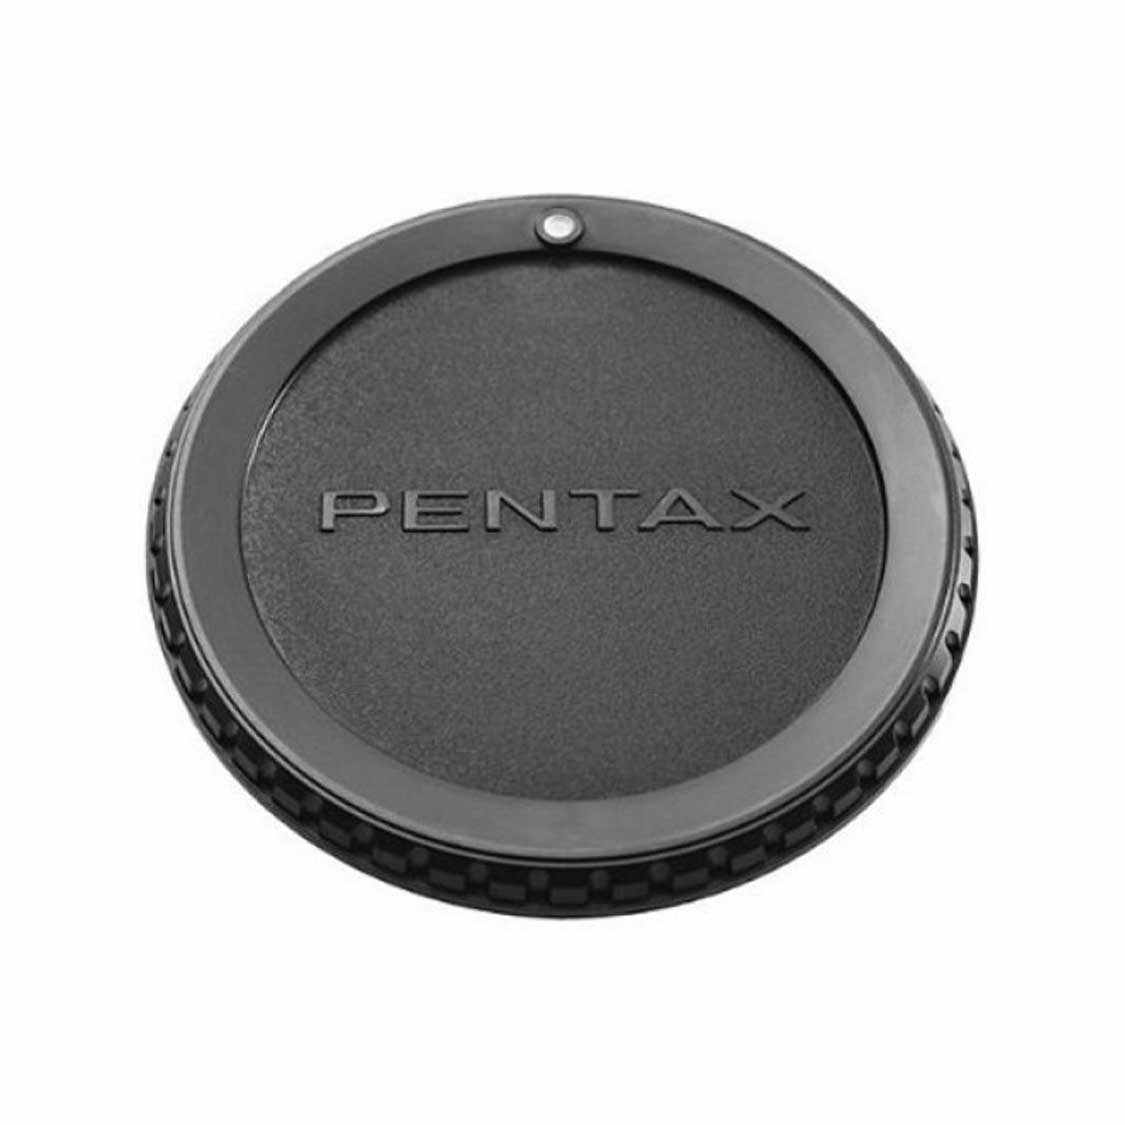 Pentax Body Cap for K-Mount